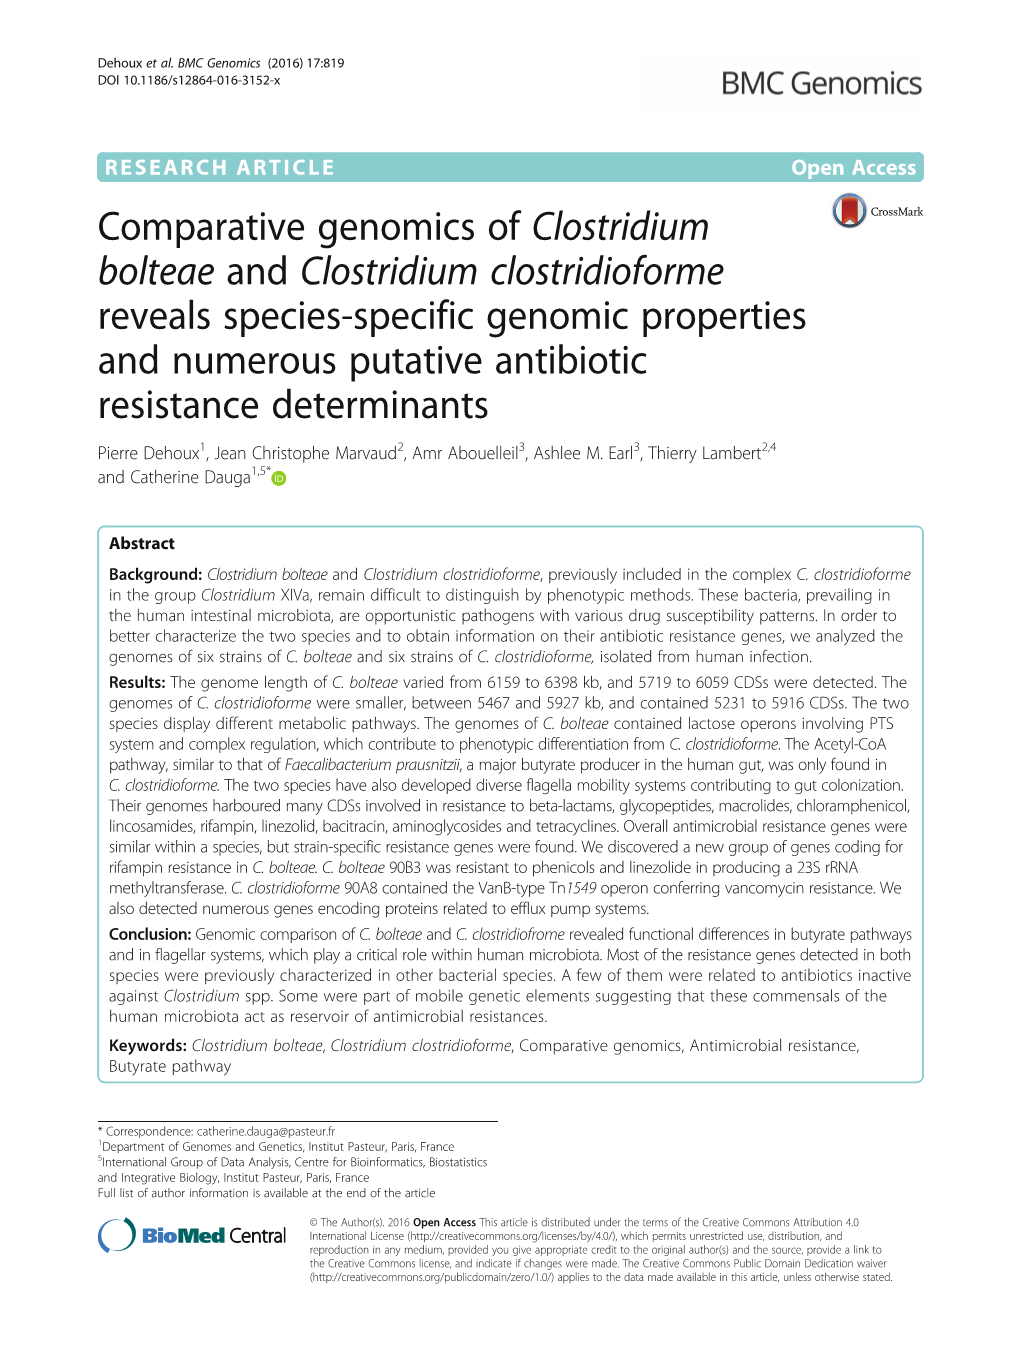 Comparative Genomics of Clostridium Bolteae and Clostridium